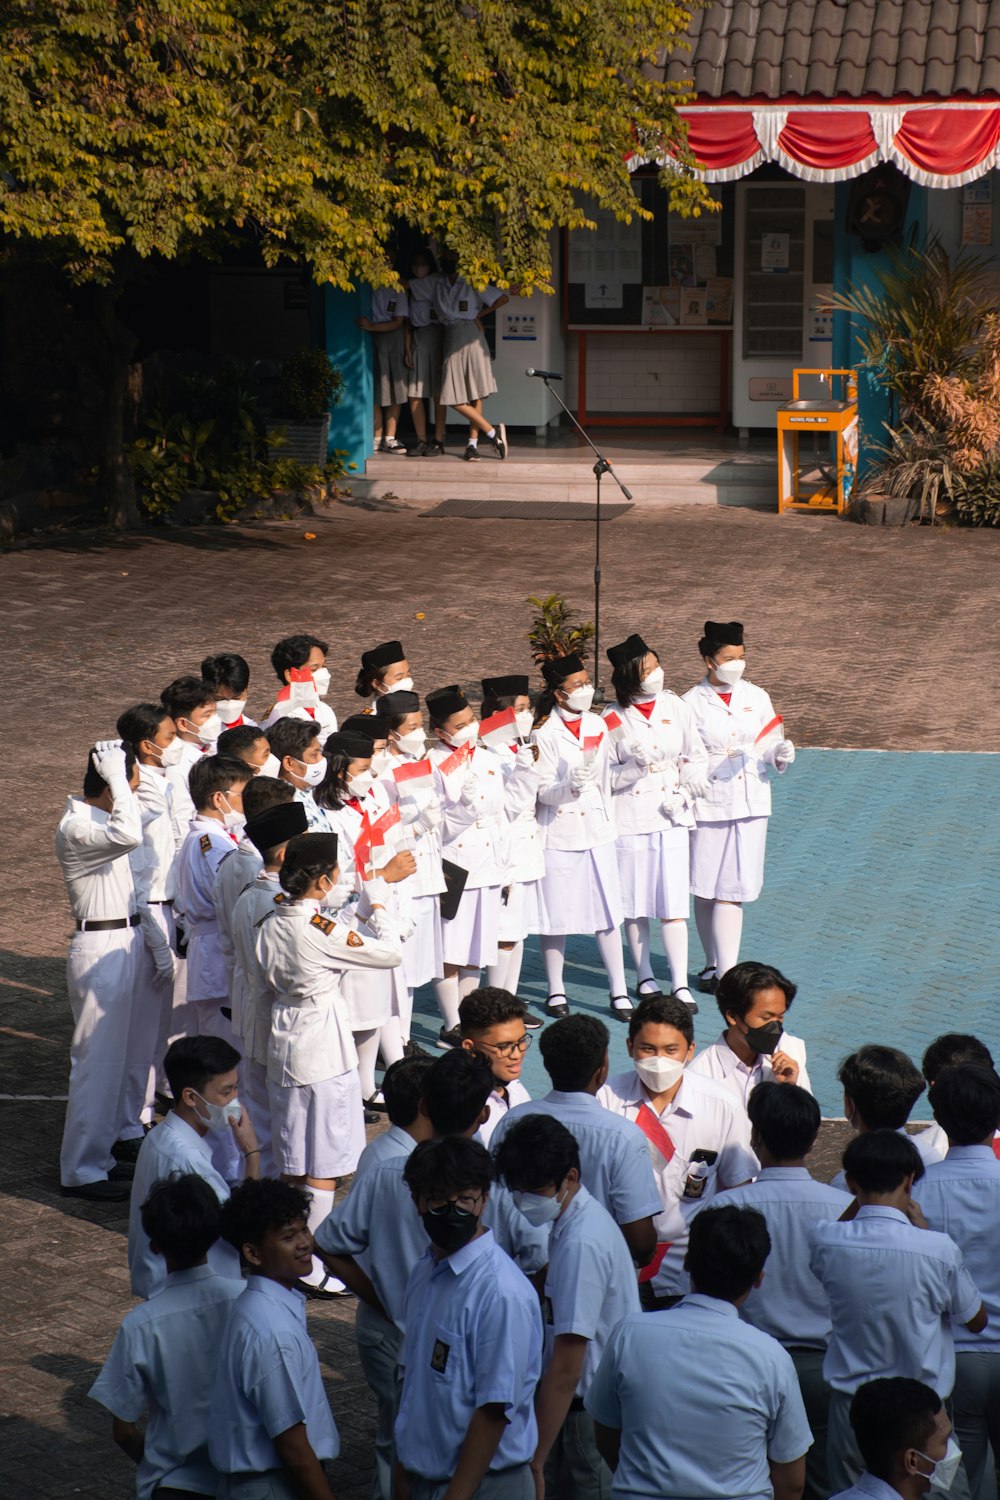 Un grupo de personas con túnicas blancas